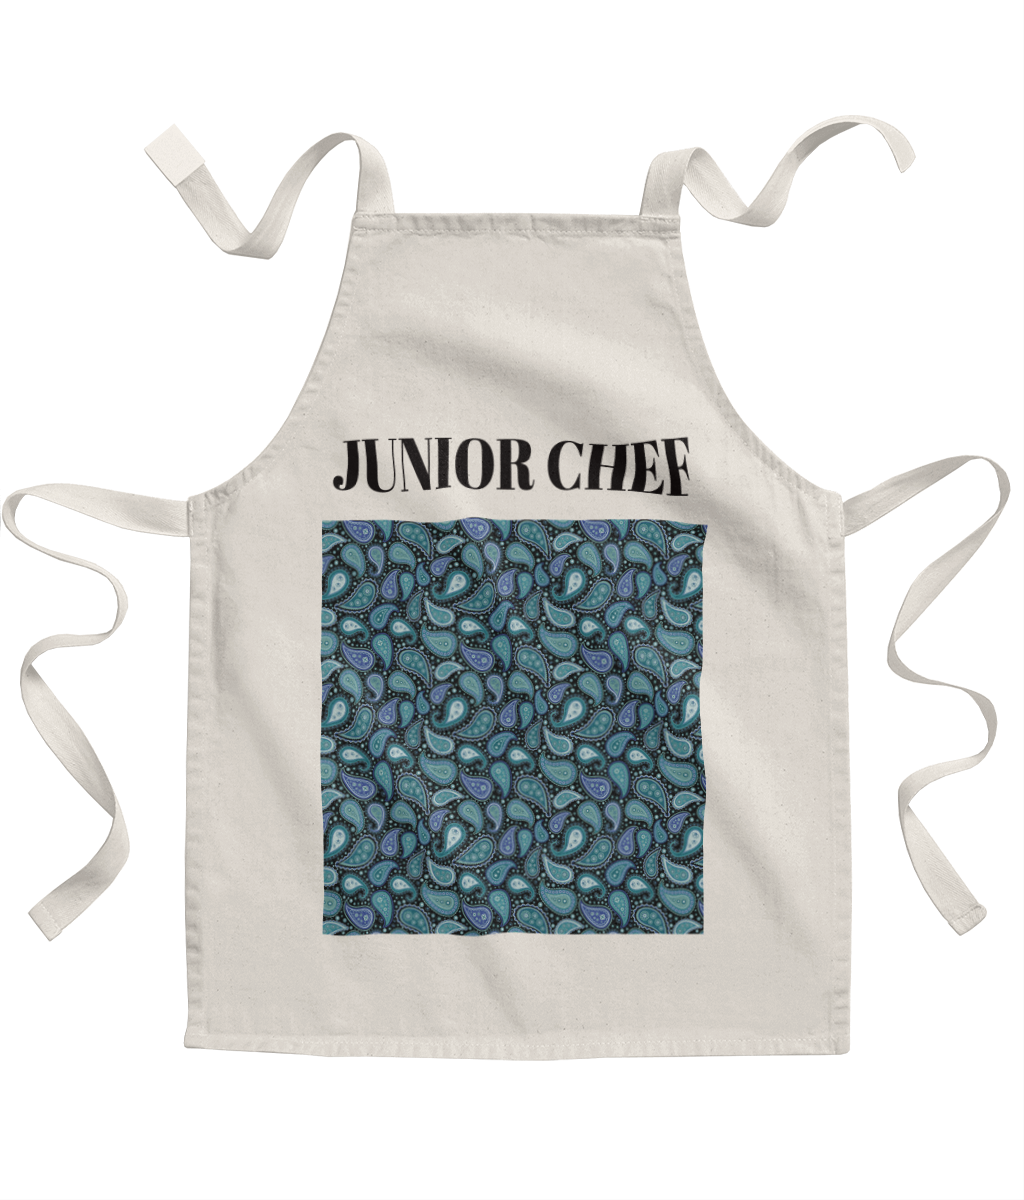 Junior Chef Apron with Blur Paisley Design.